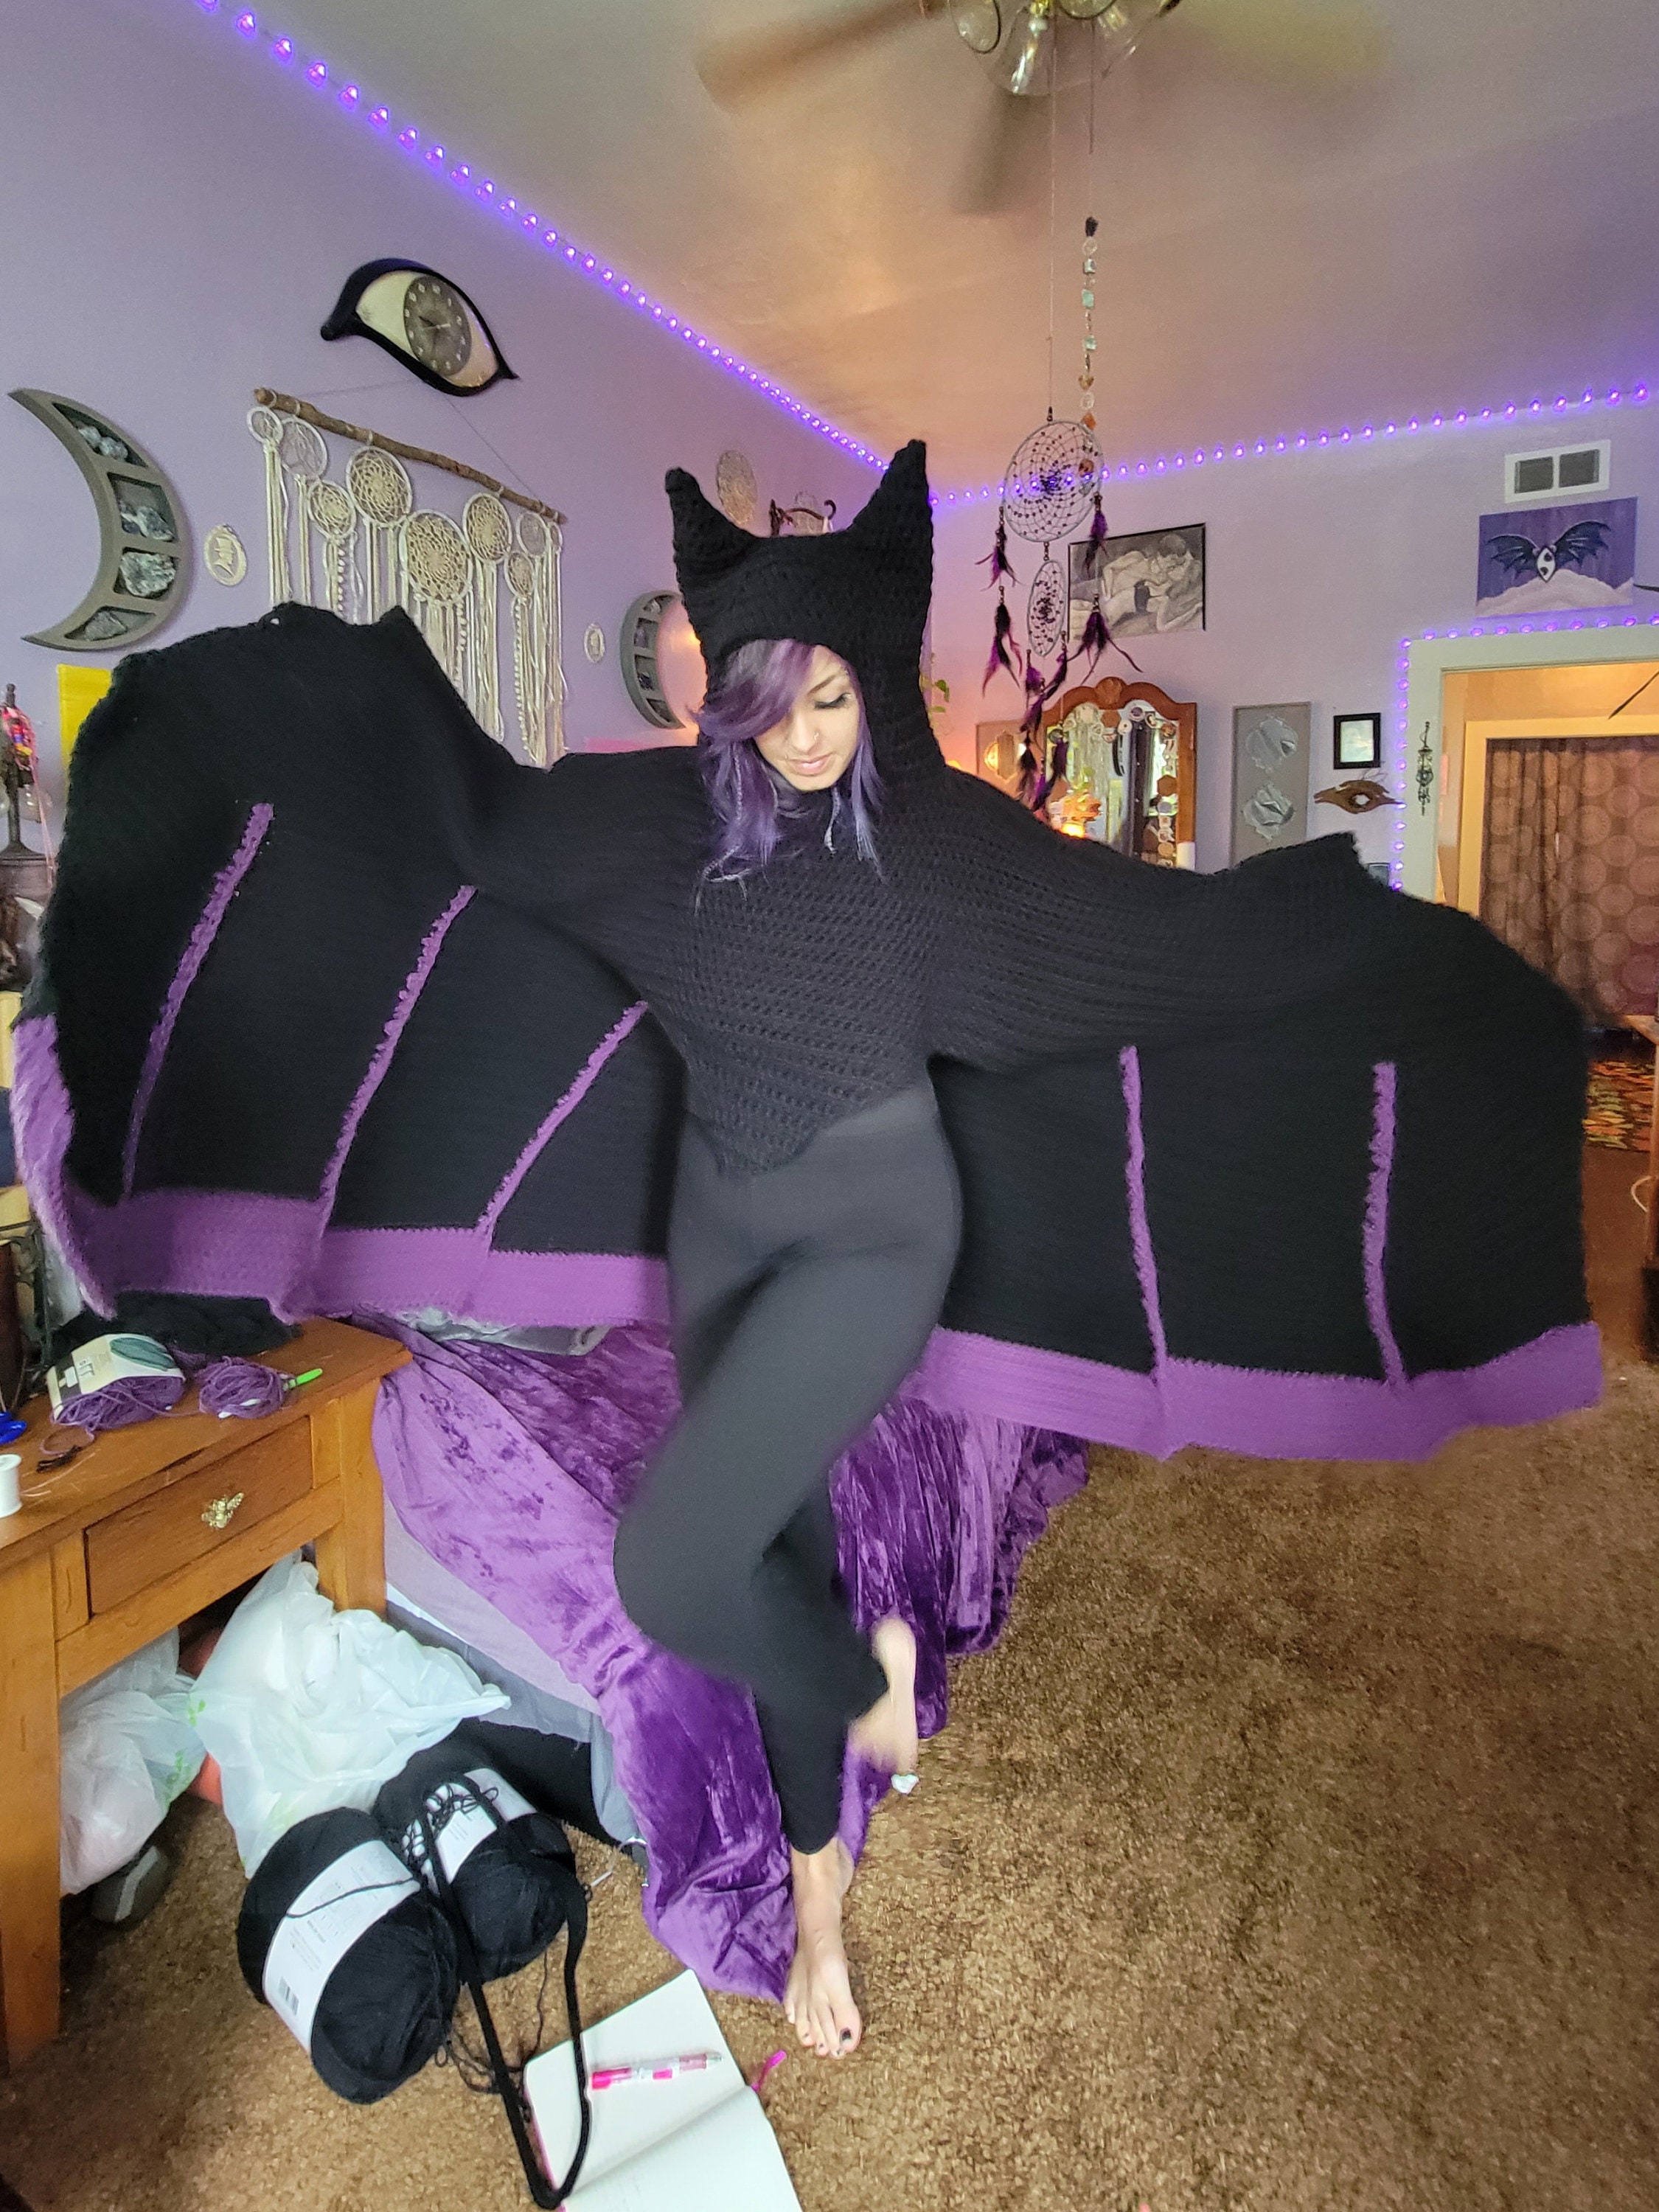 AKOEE Women's Batwing Sleeve Cloak